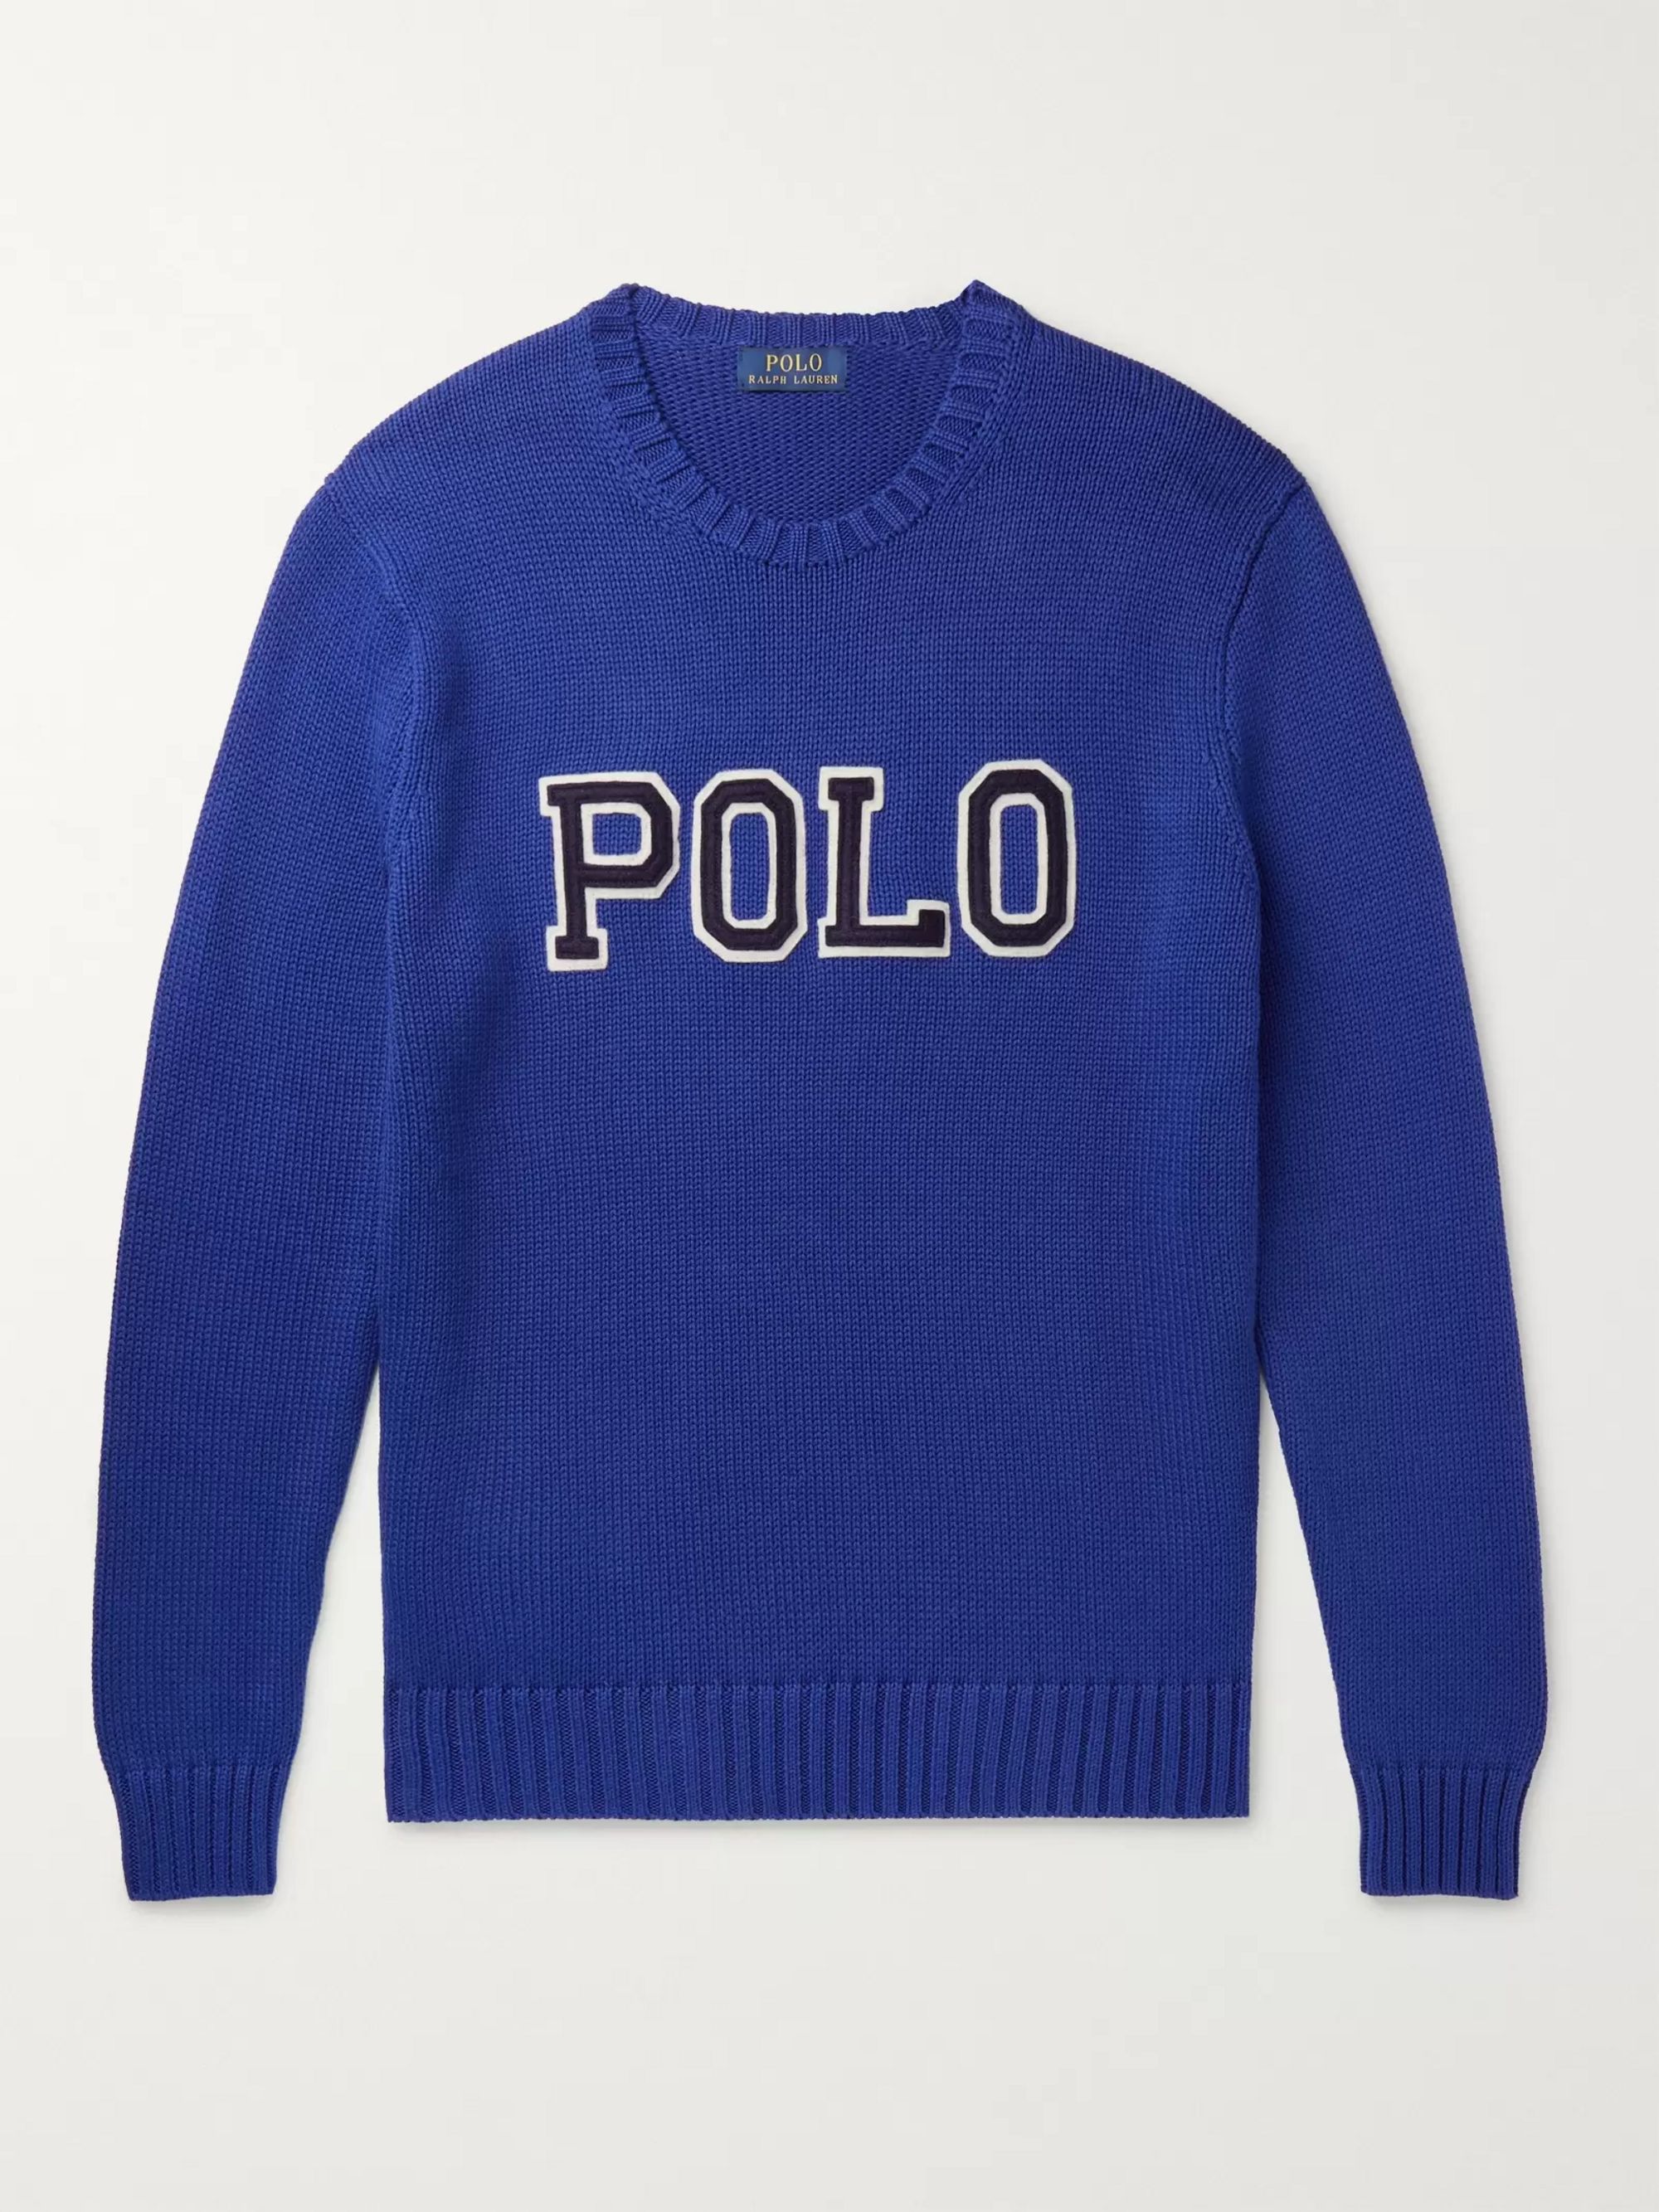 polo blue sweater - 52% OFF - tajpalace.net